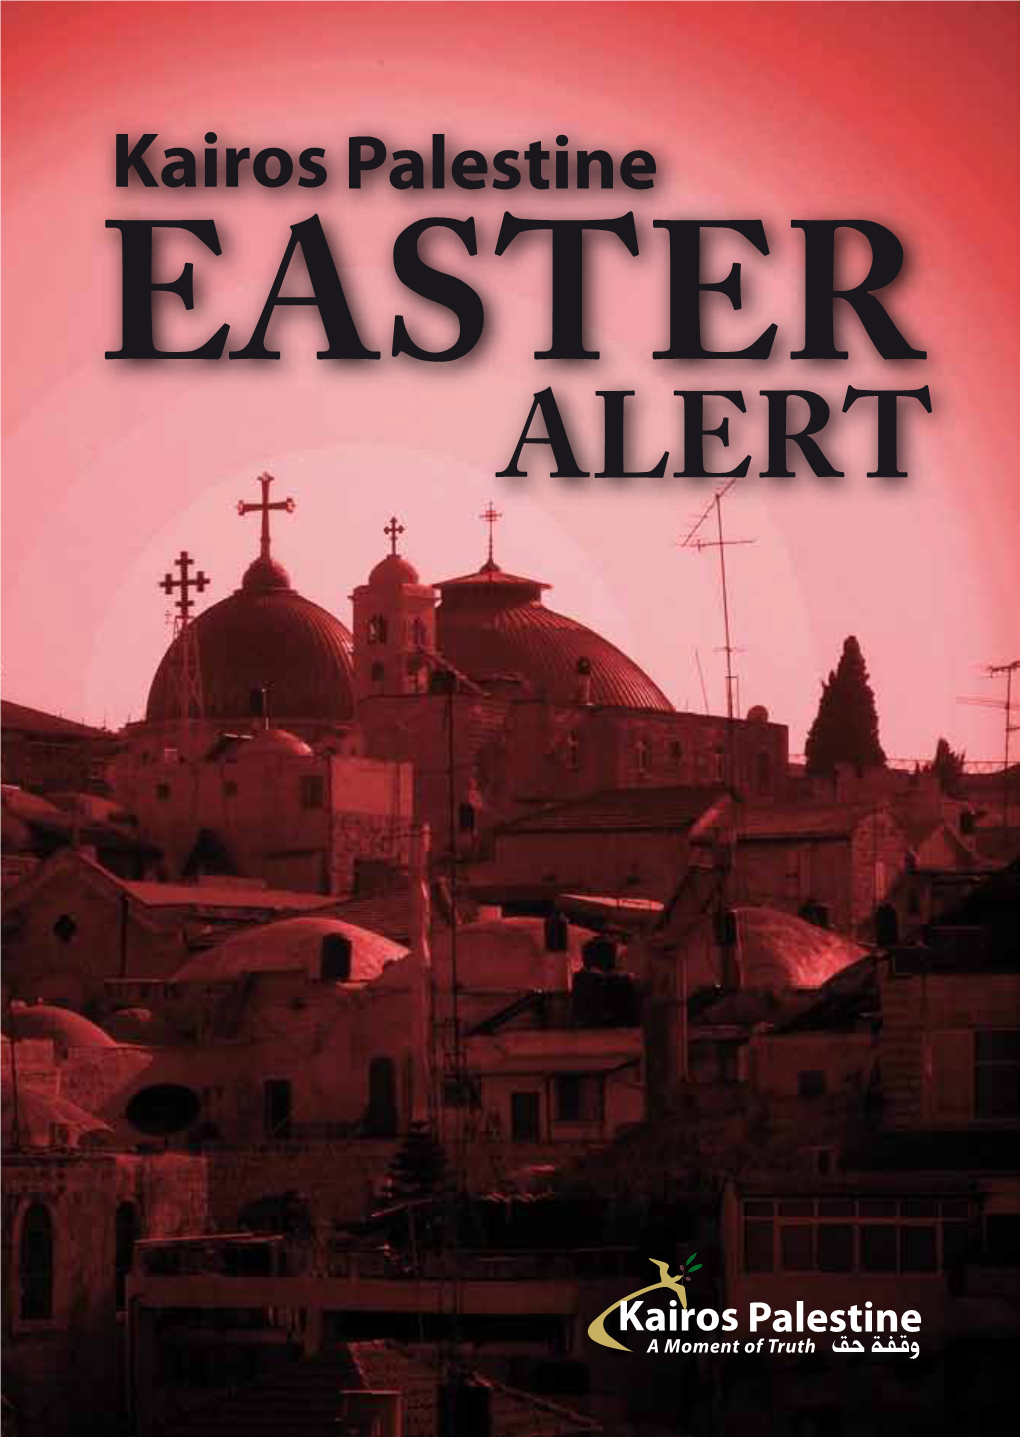 English Easter Alert